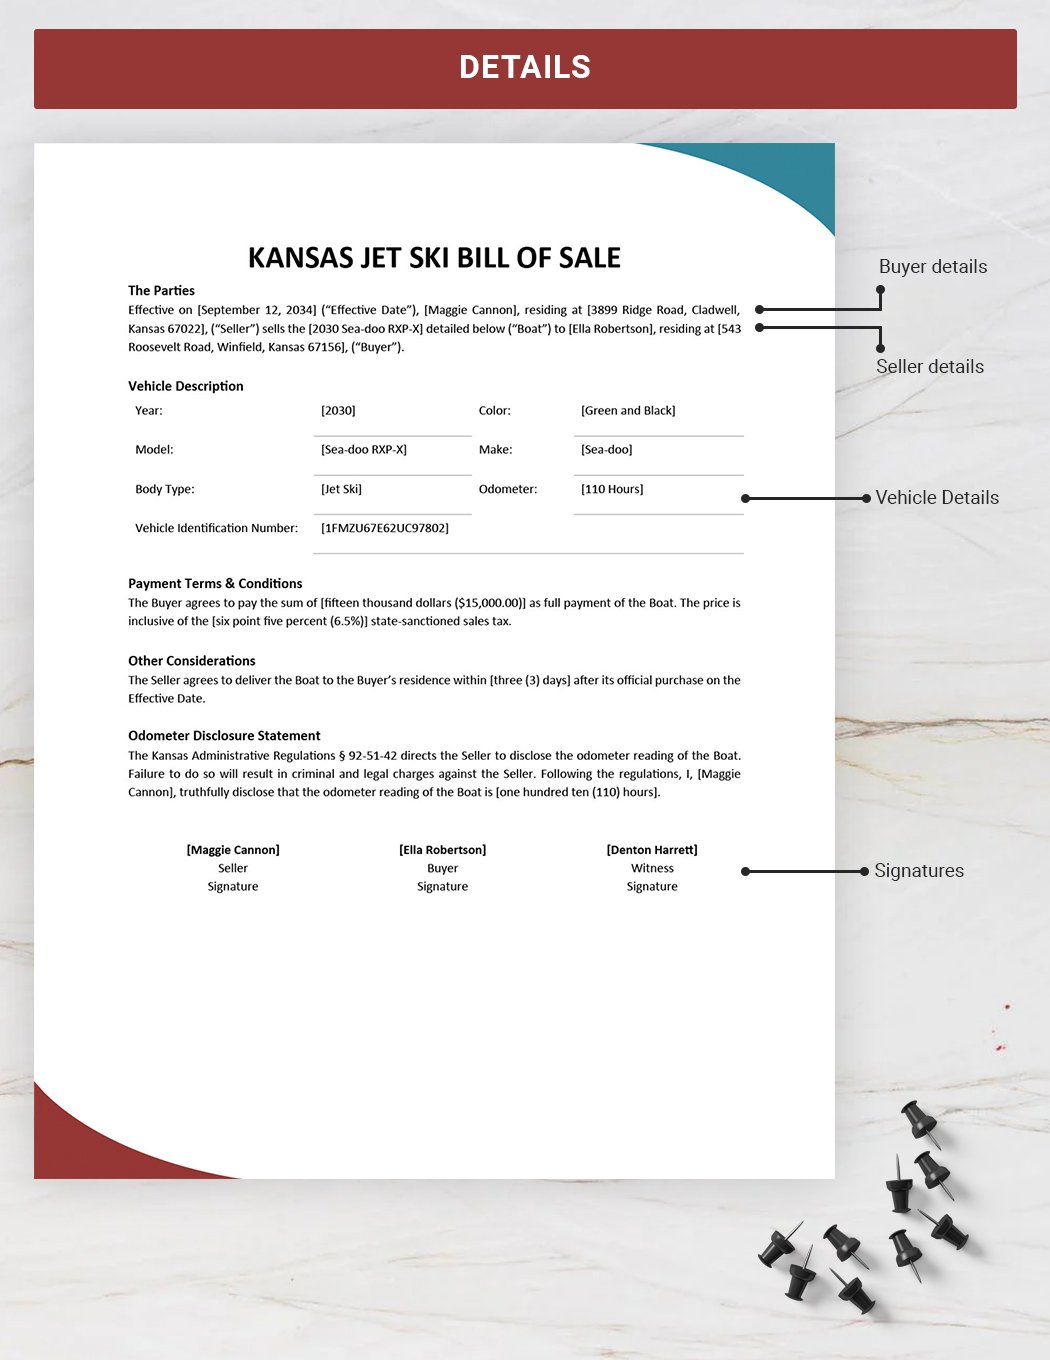 Kansas Jet Ski Bill of Sale Form Template